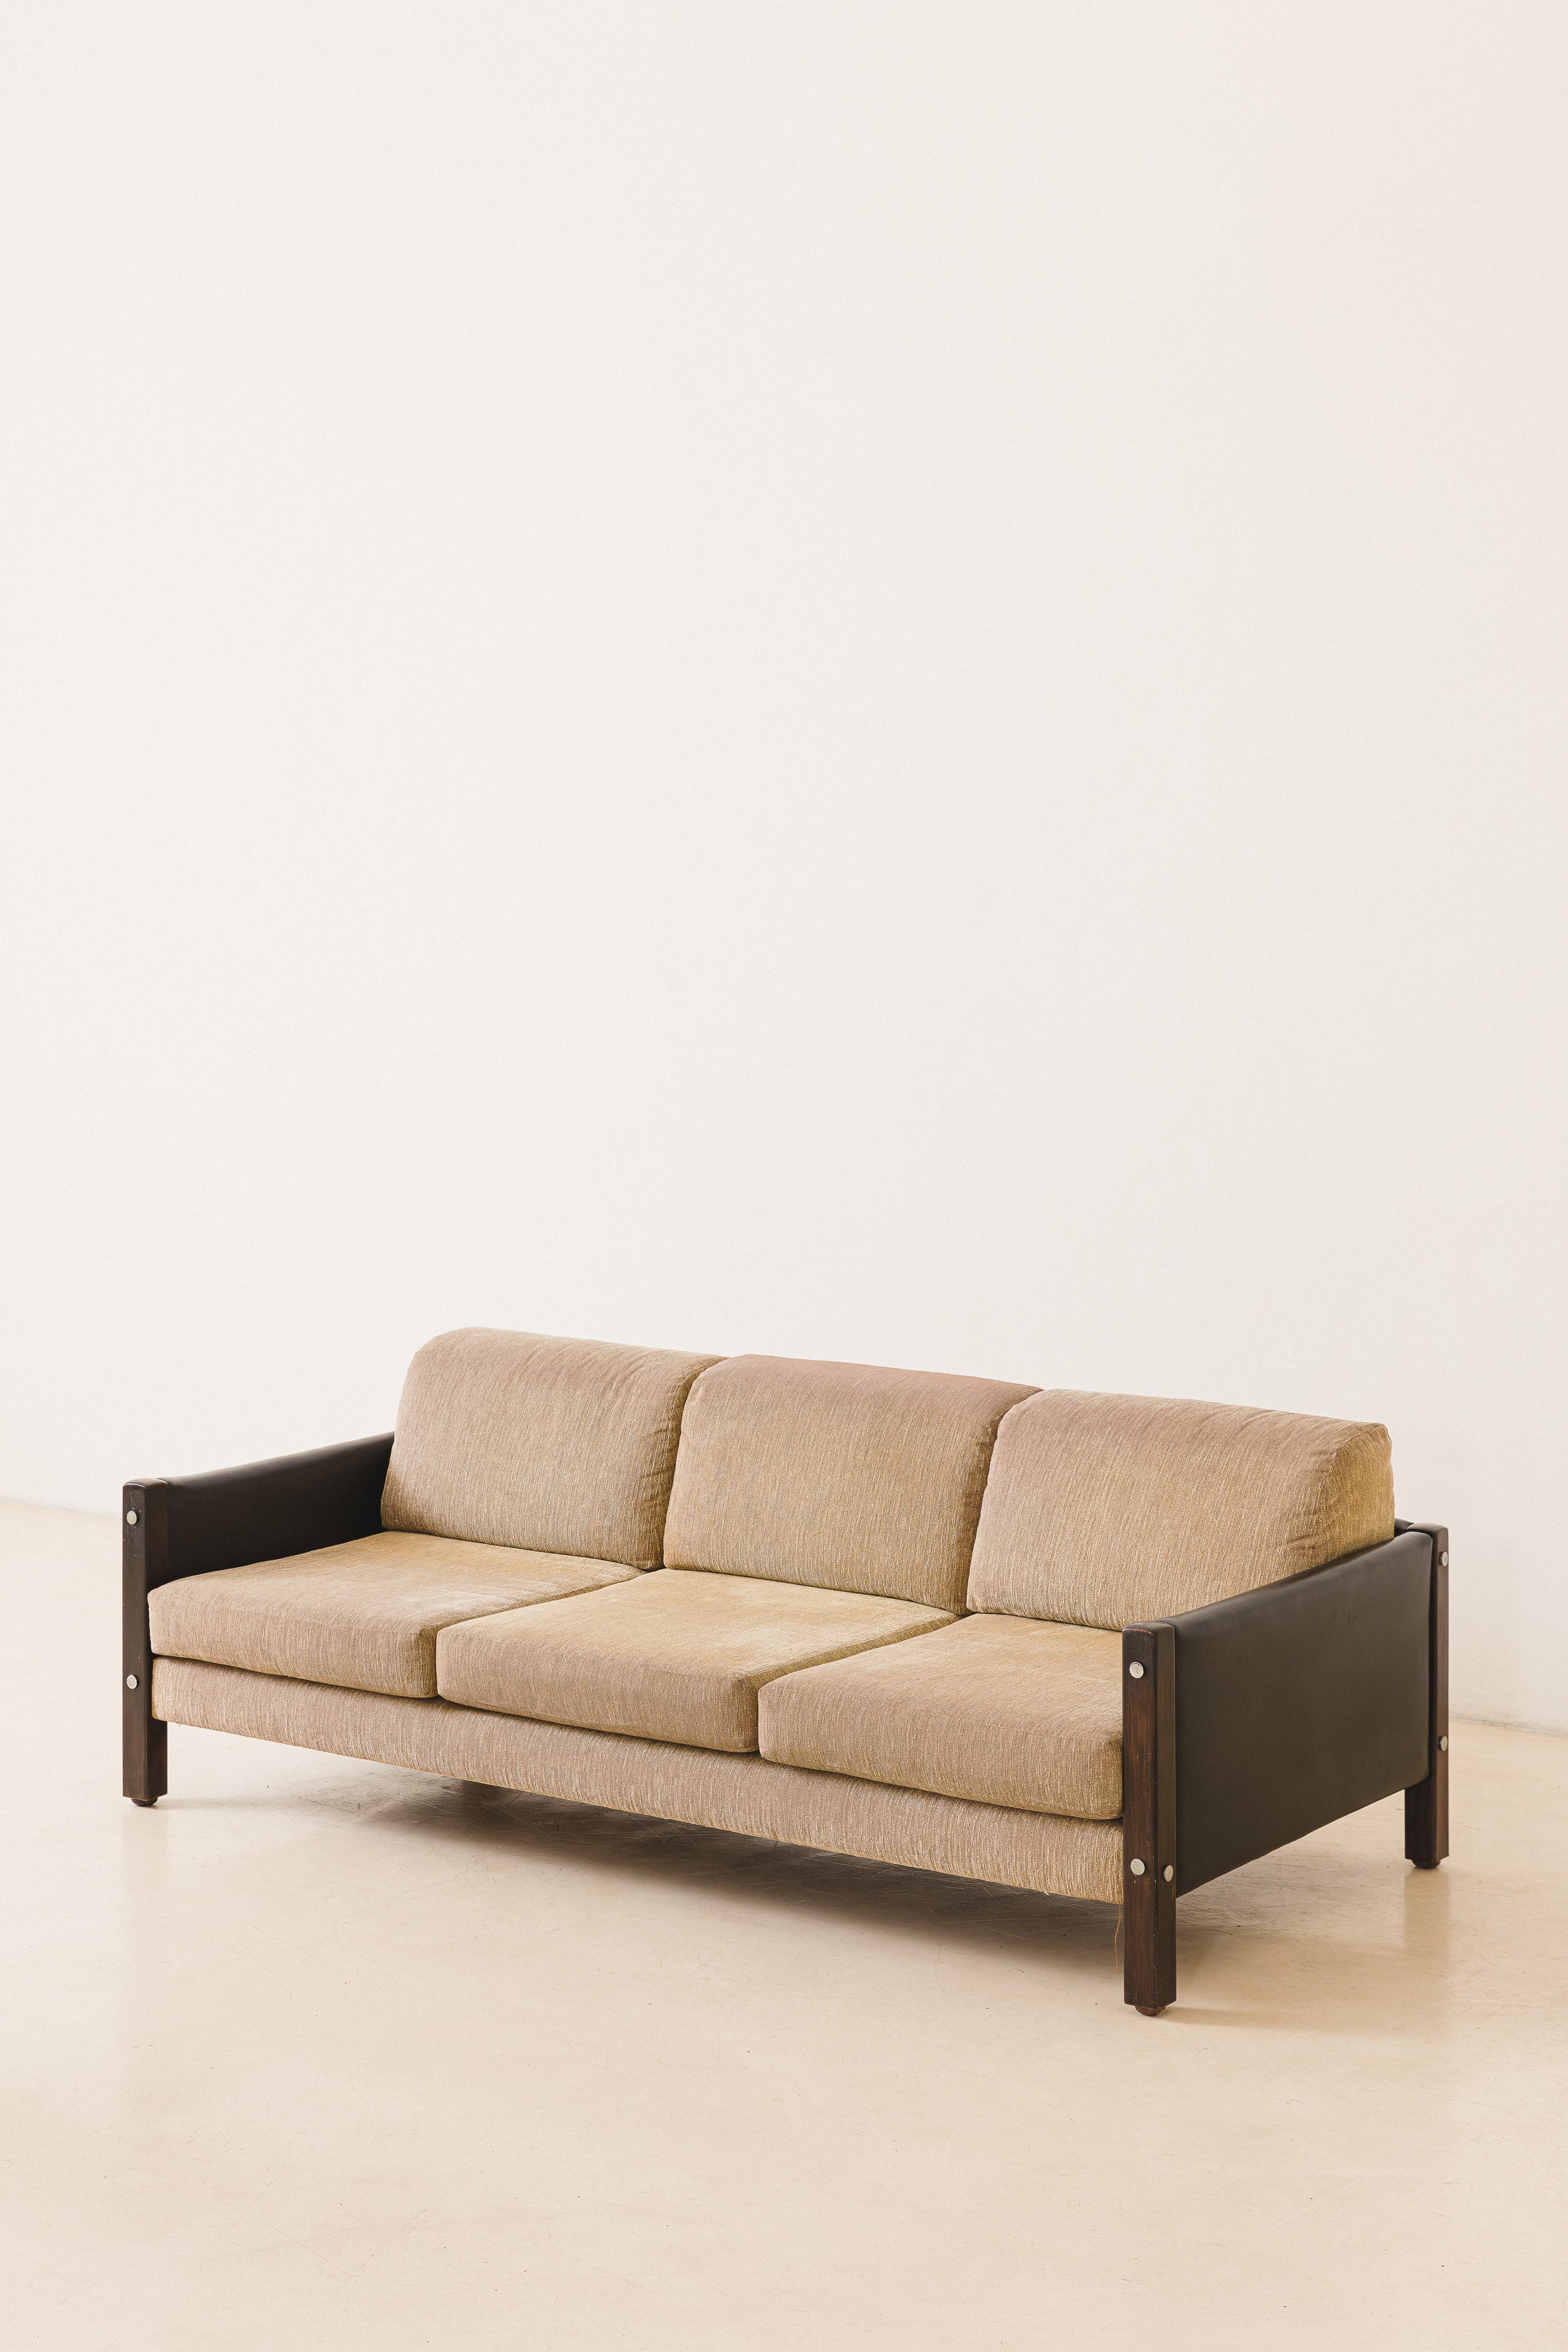 Dreisitziges Millor-Sofa aus Palisanderholz, Sergio Rodrigues Modernes Design, Brasilien, 1960er Jahre (Moderne der Mitte des Jahrhunderts) im Angebot